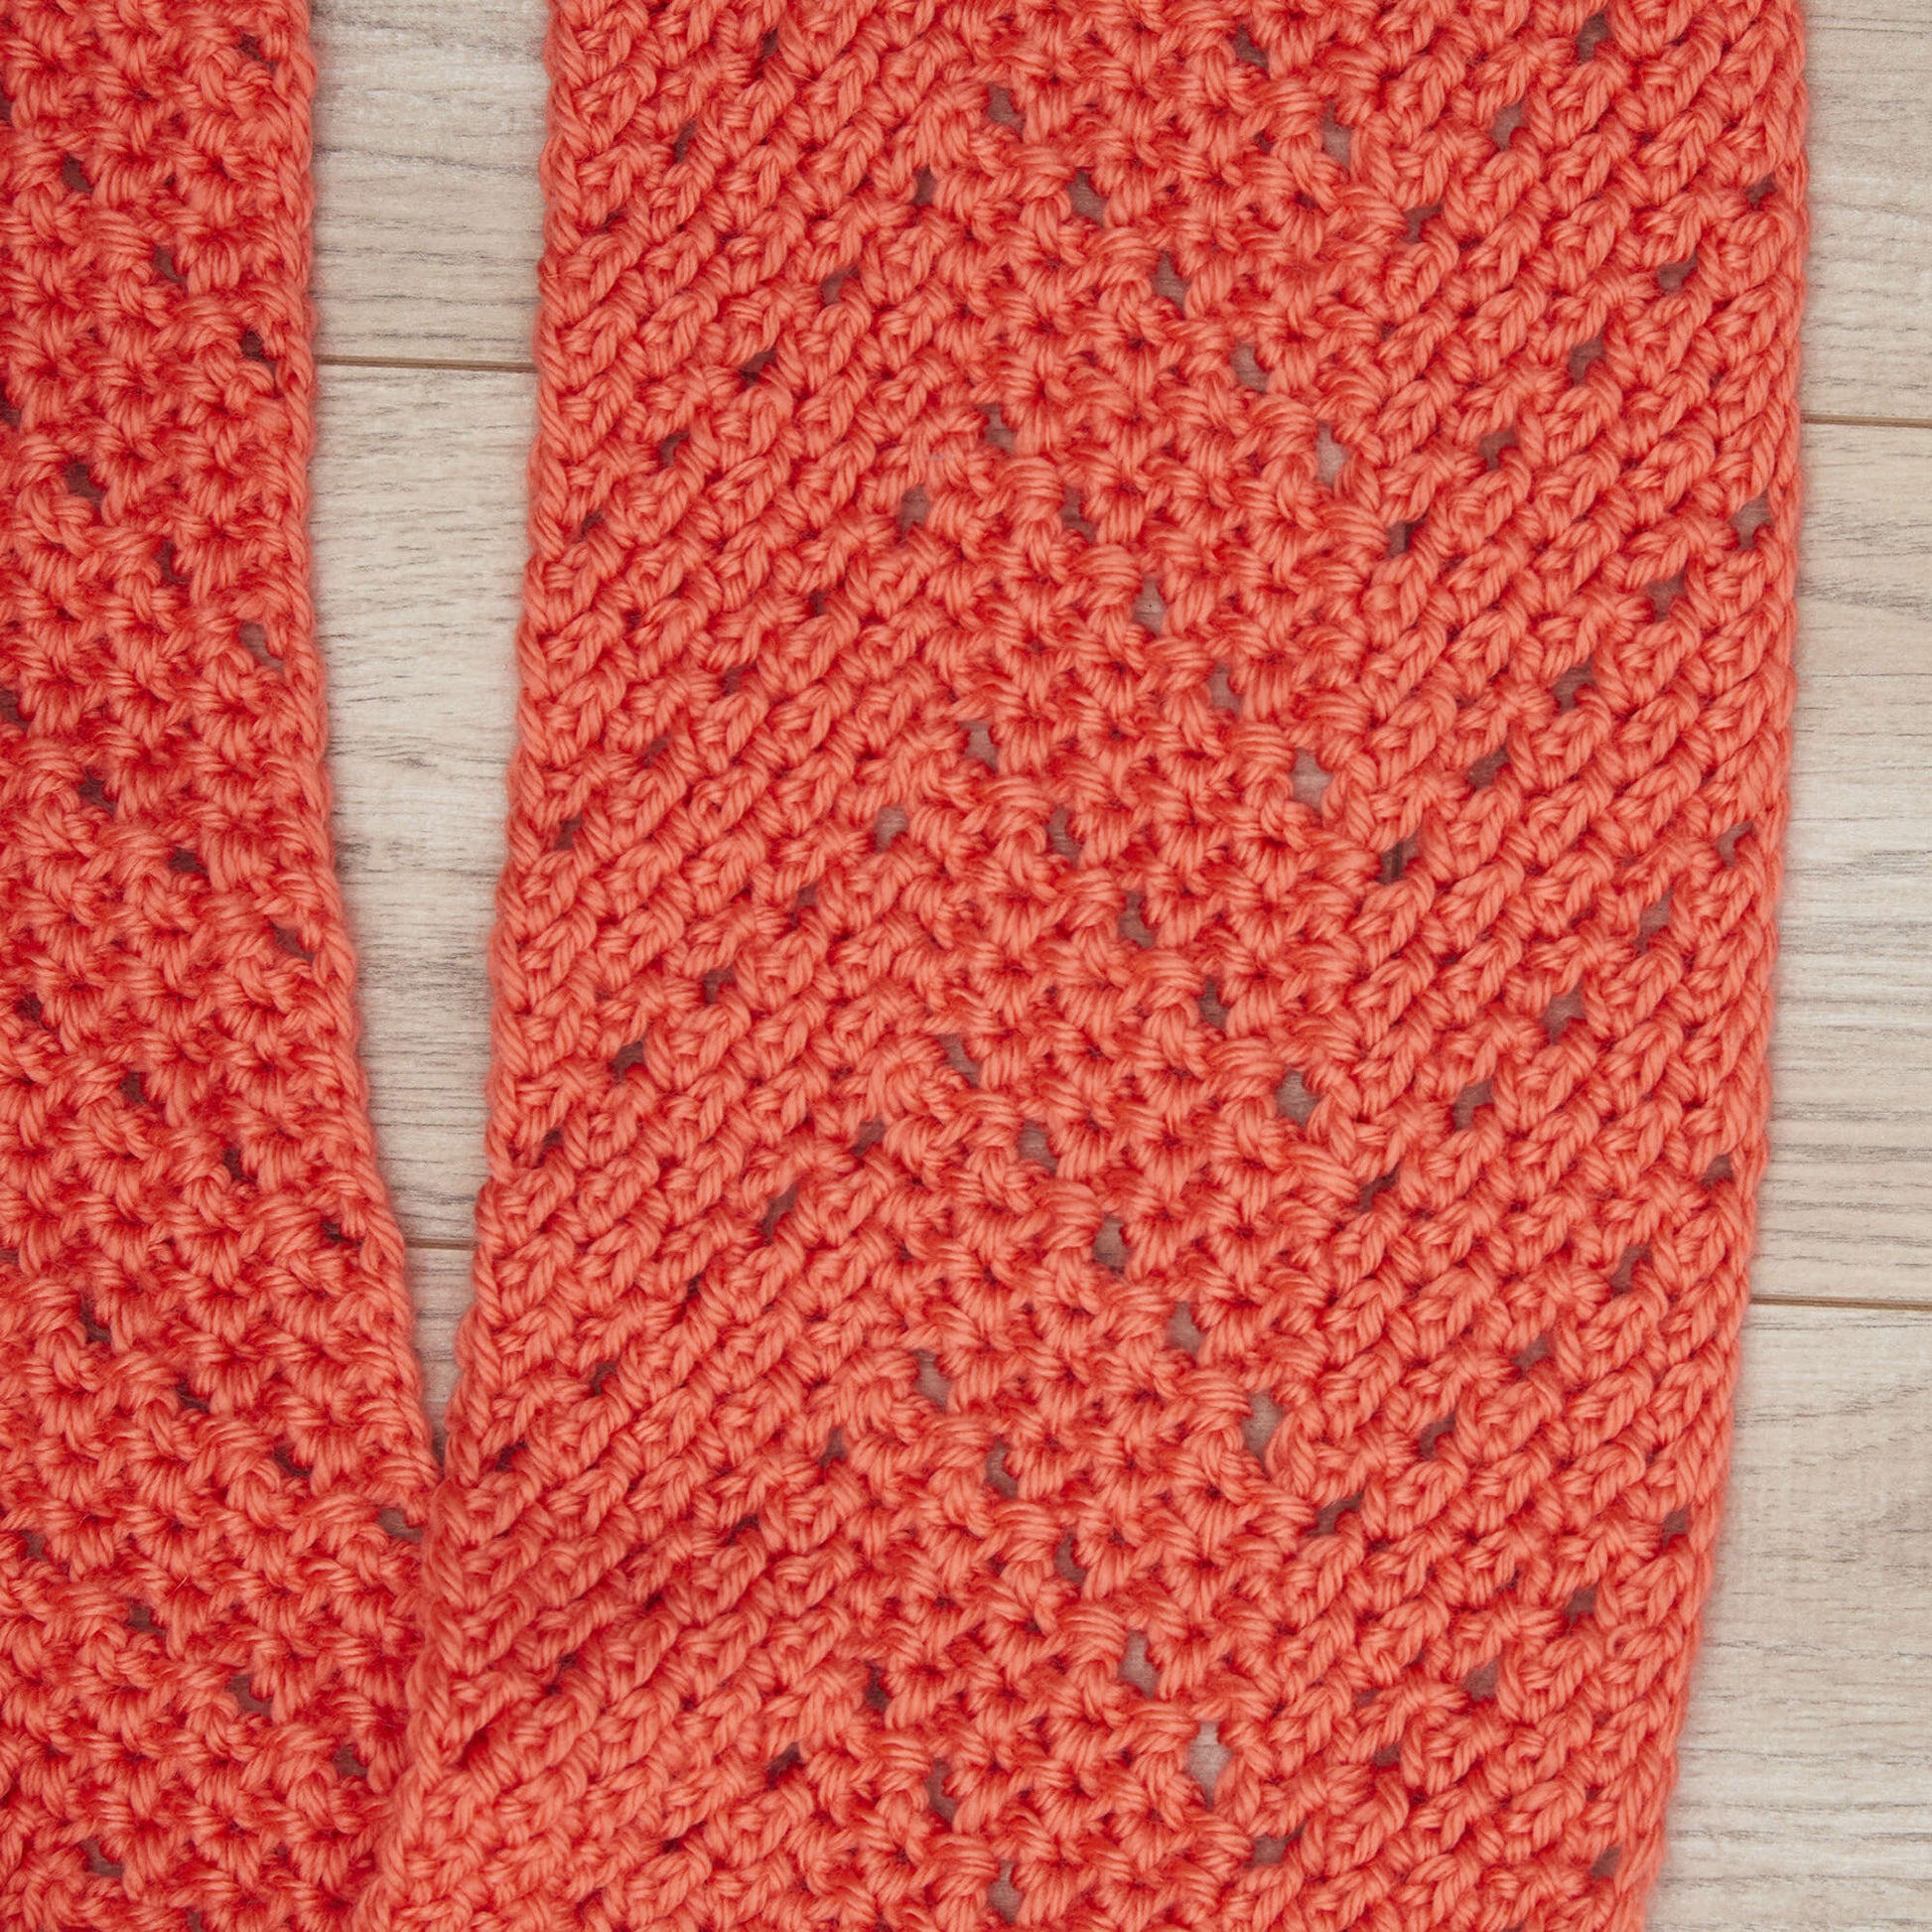 Free Red Heart Chevron Herringbone Cowl Crochet Pattern